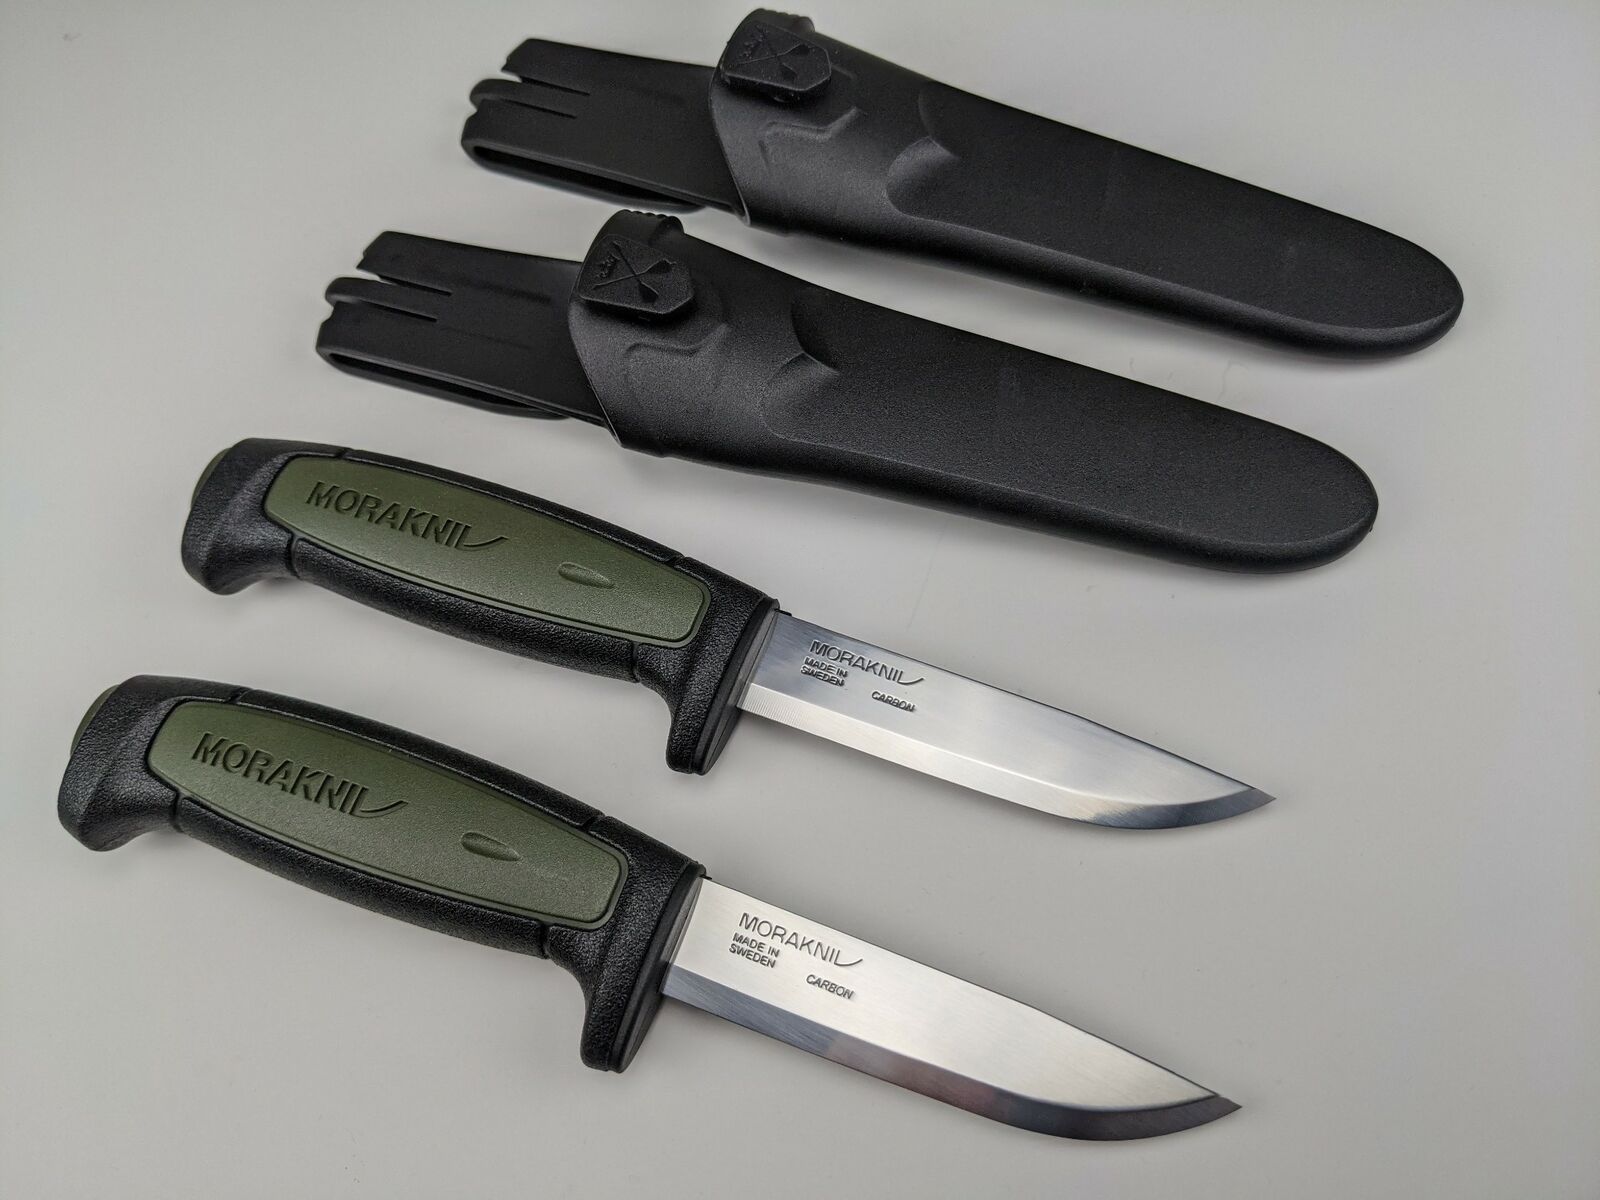 2 Pack Lot - Morakniv Basic 511 Knife & Sheath - Green/Black Handle Mora Knives Morakniv